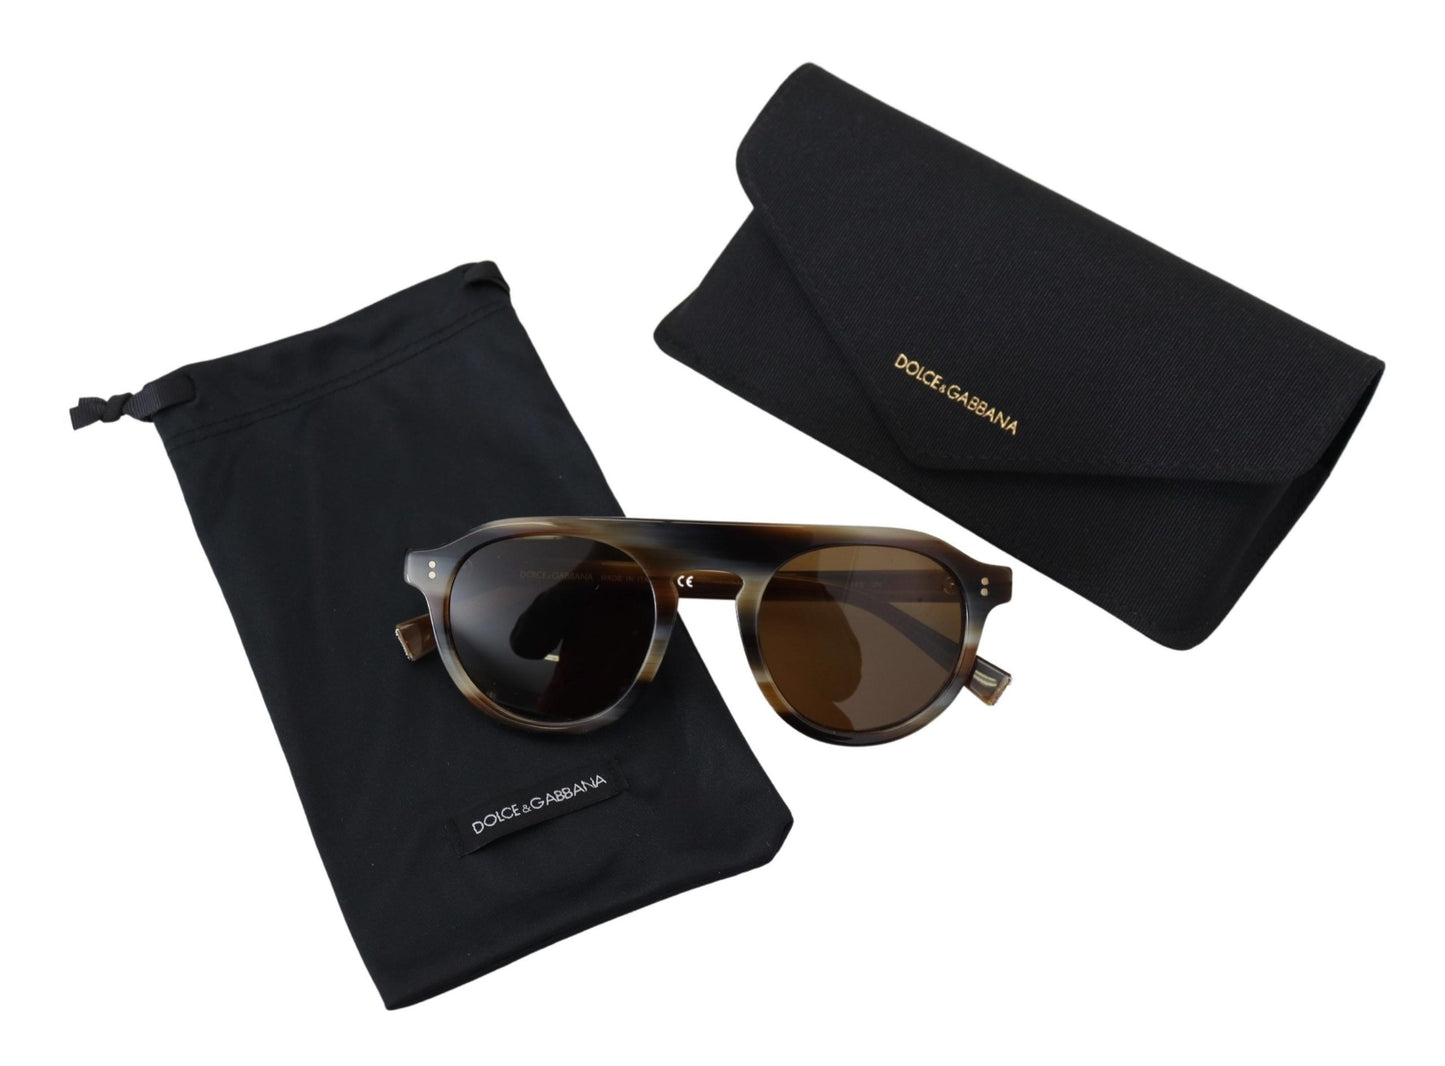 Dolce & Gabbana Brown Tortoise Oval Oval Full Eyewear DG4306 occhiali da sole